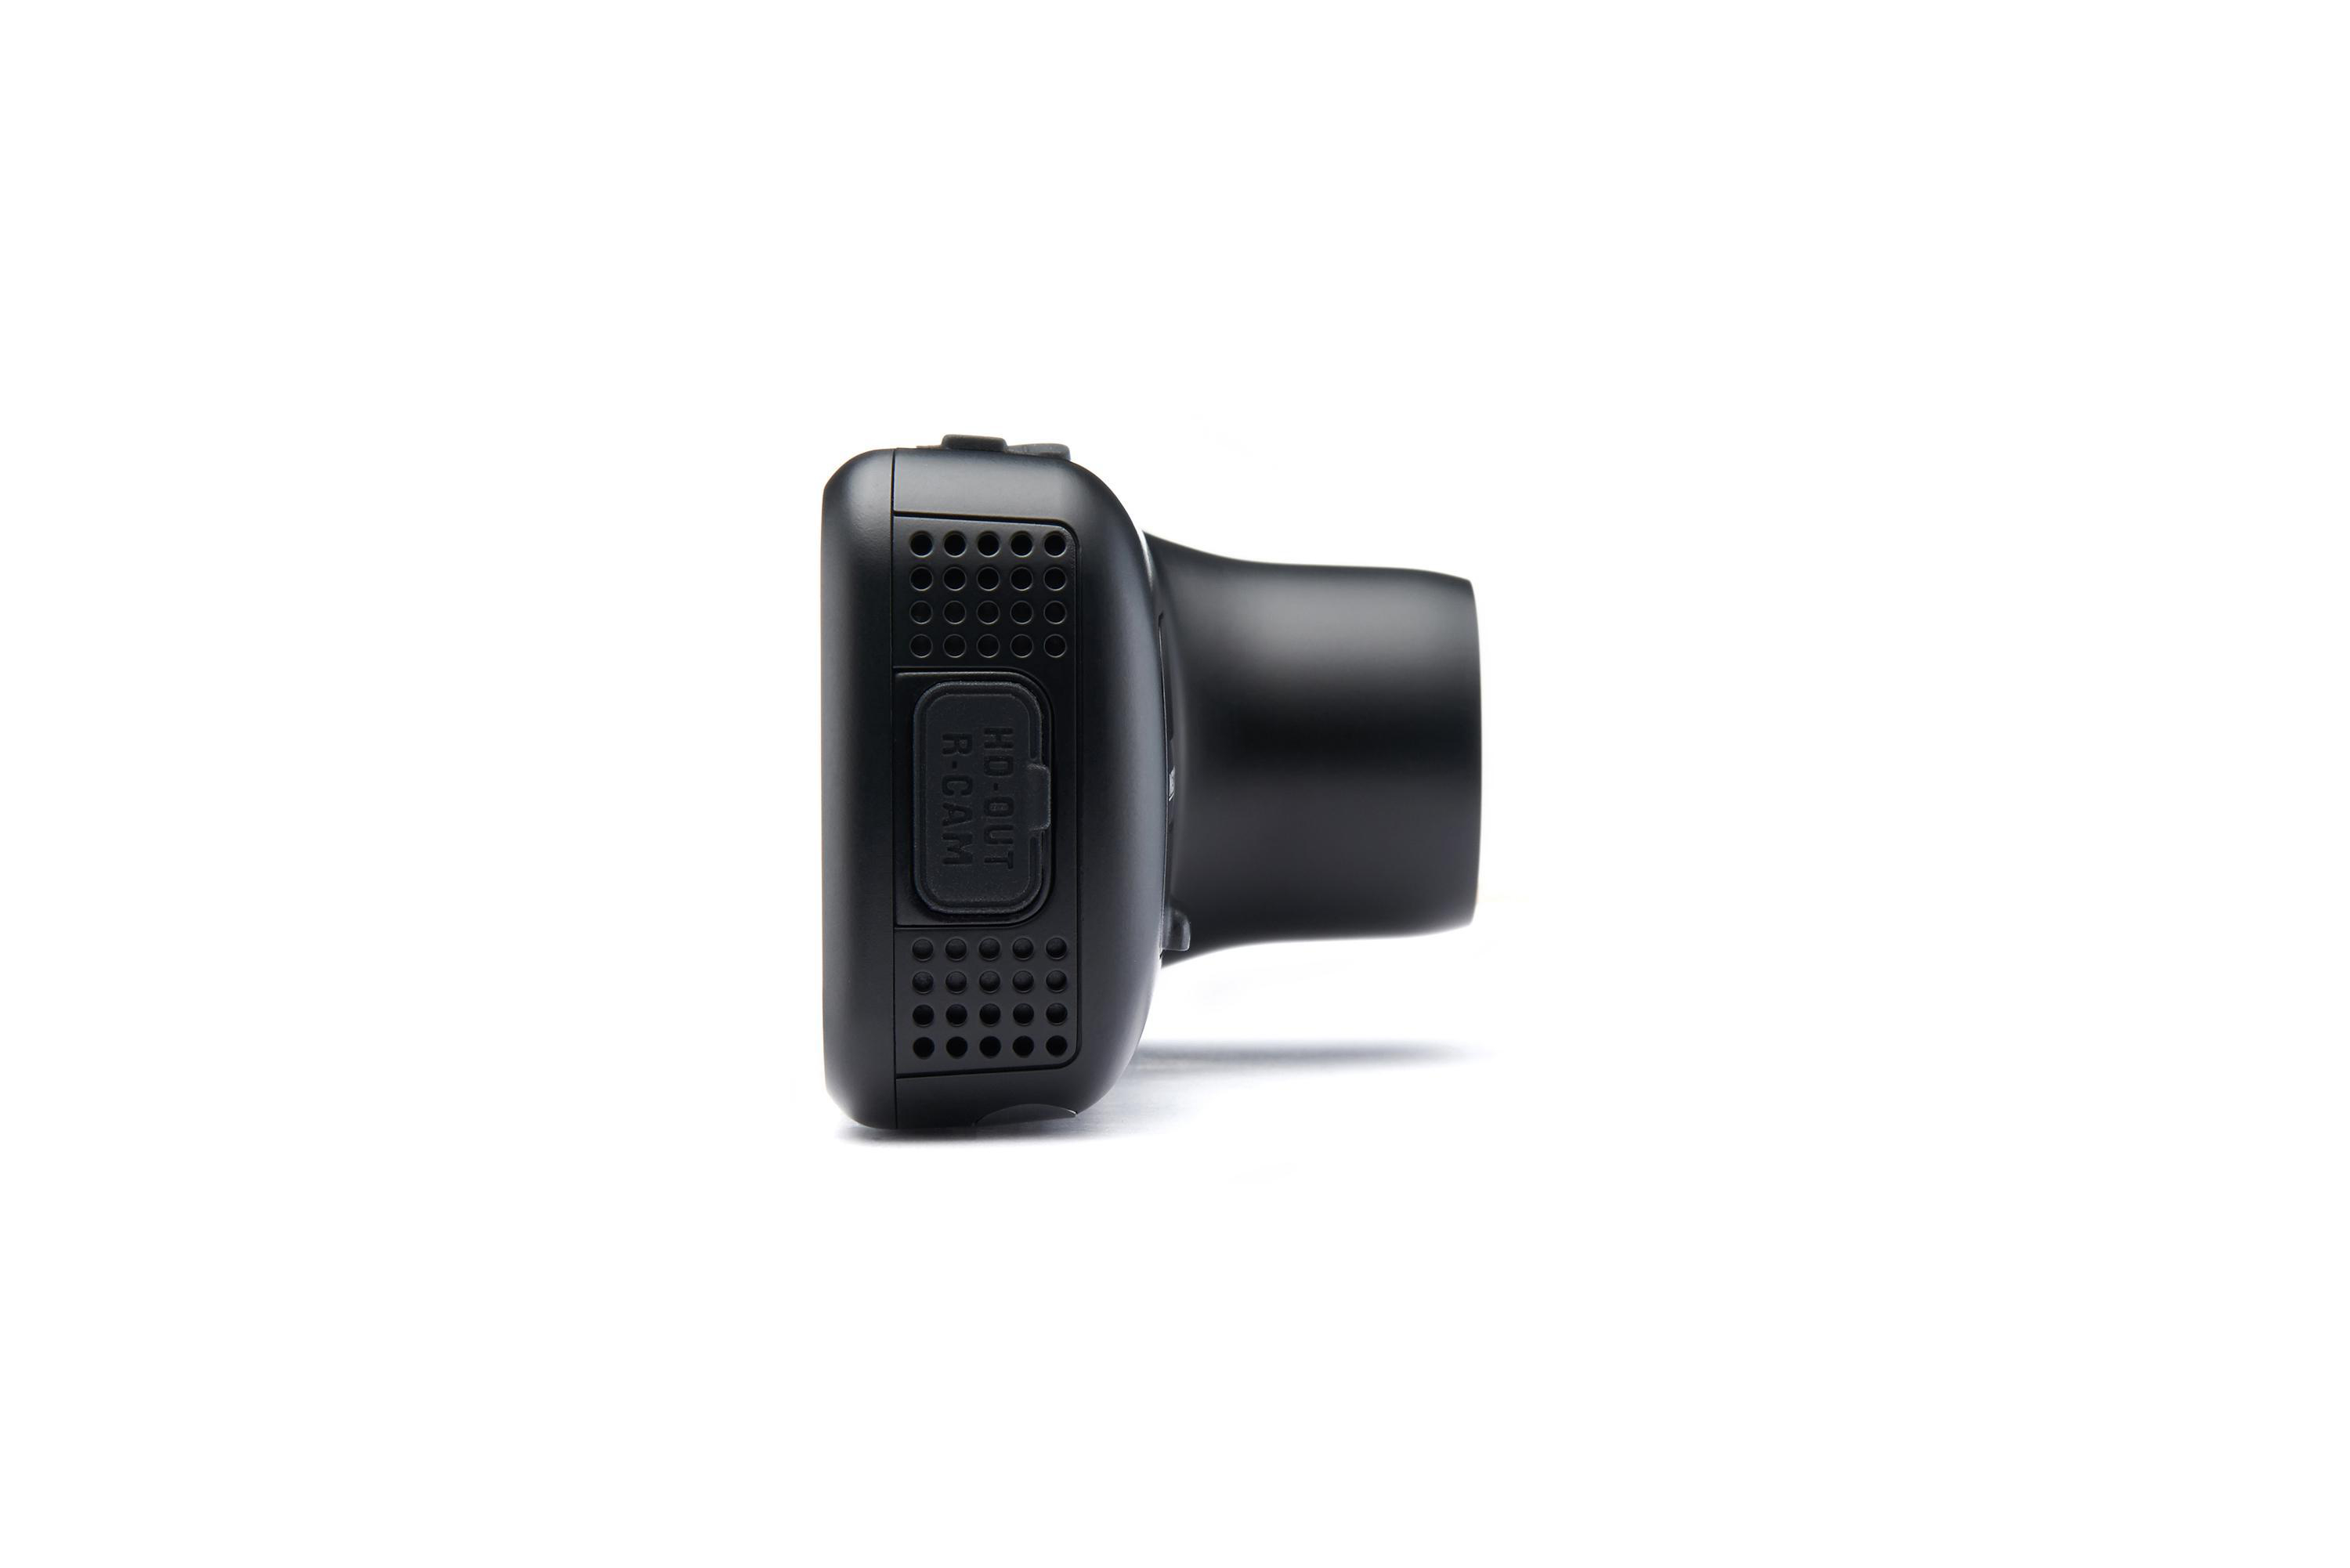 NEXTBASE 322GW Dashcam , 6,35 Touchscreen cm Display